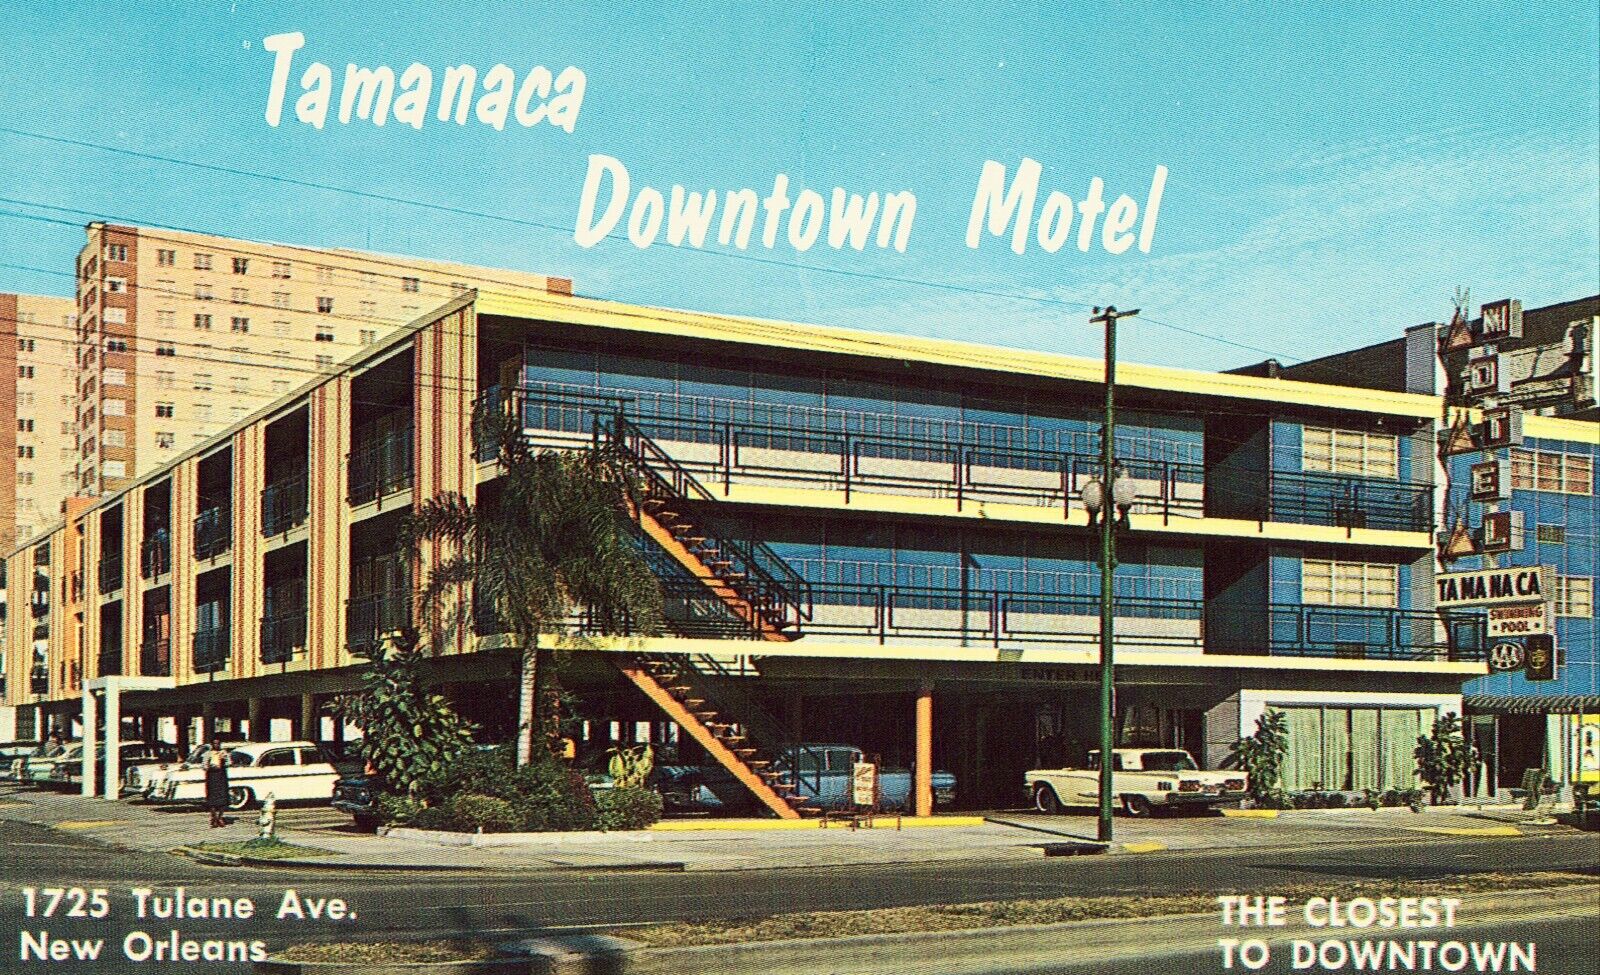 Tamanaca Downtown Motel - New Orleans, Louisiana Vintage Postcard